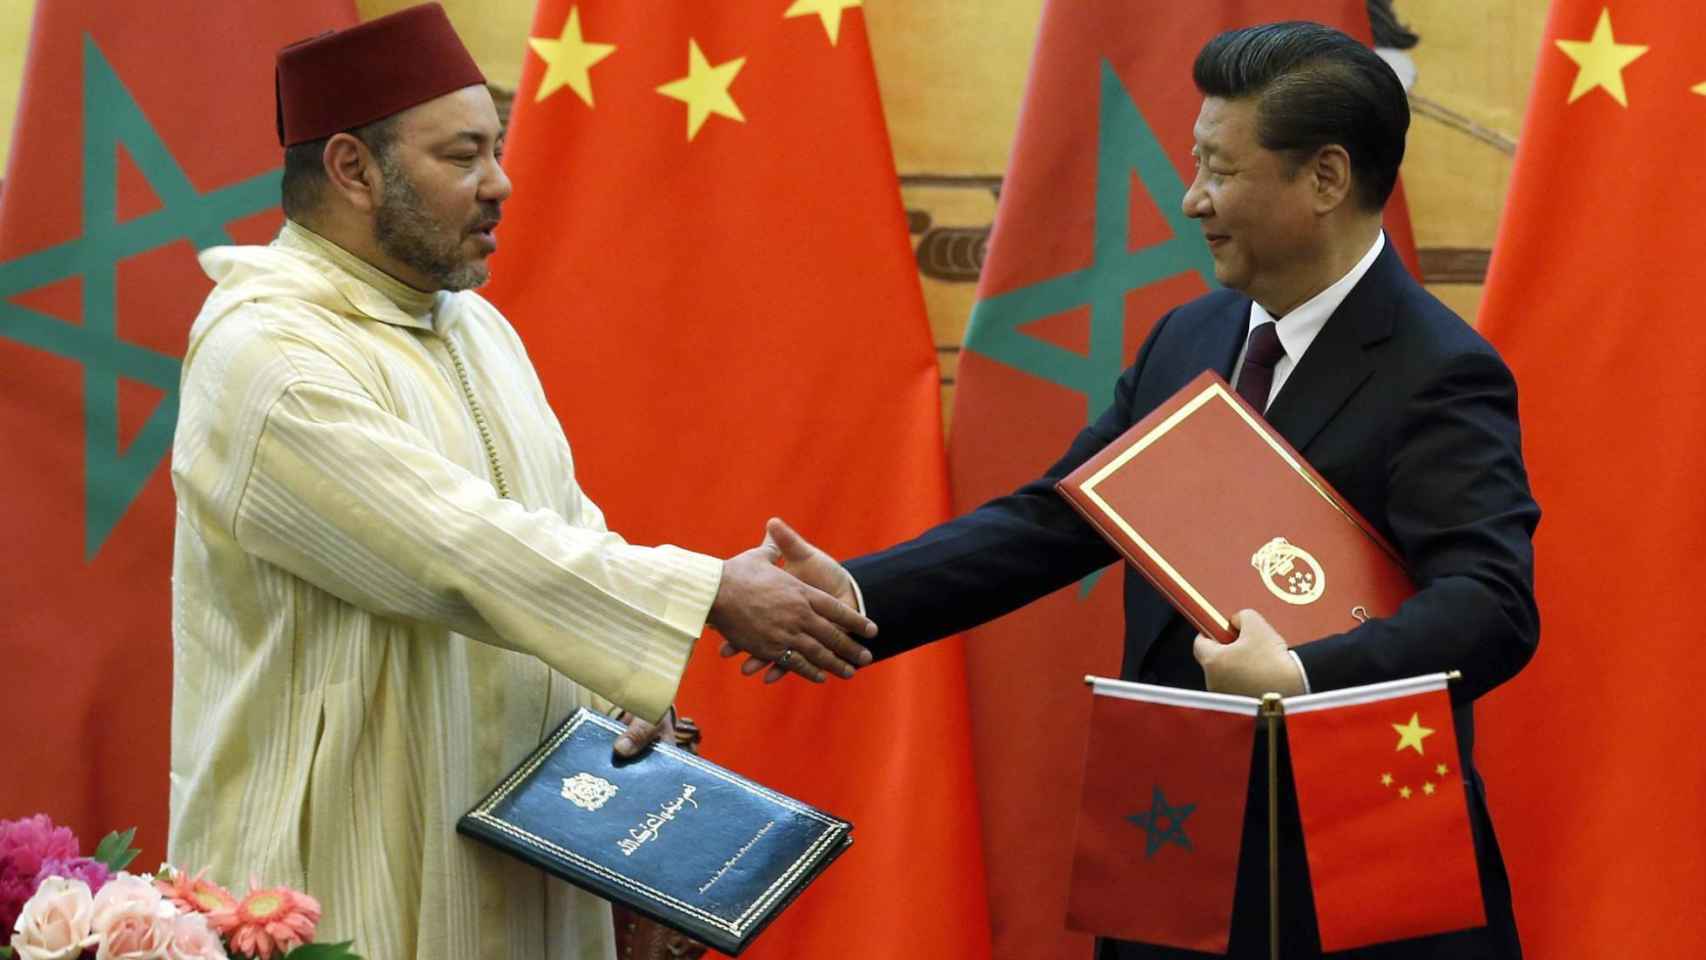 El rey de Marruecos, Mohamed IV, da la mano al presidente chino, Xi Jinping.